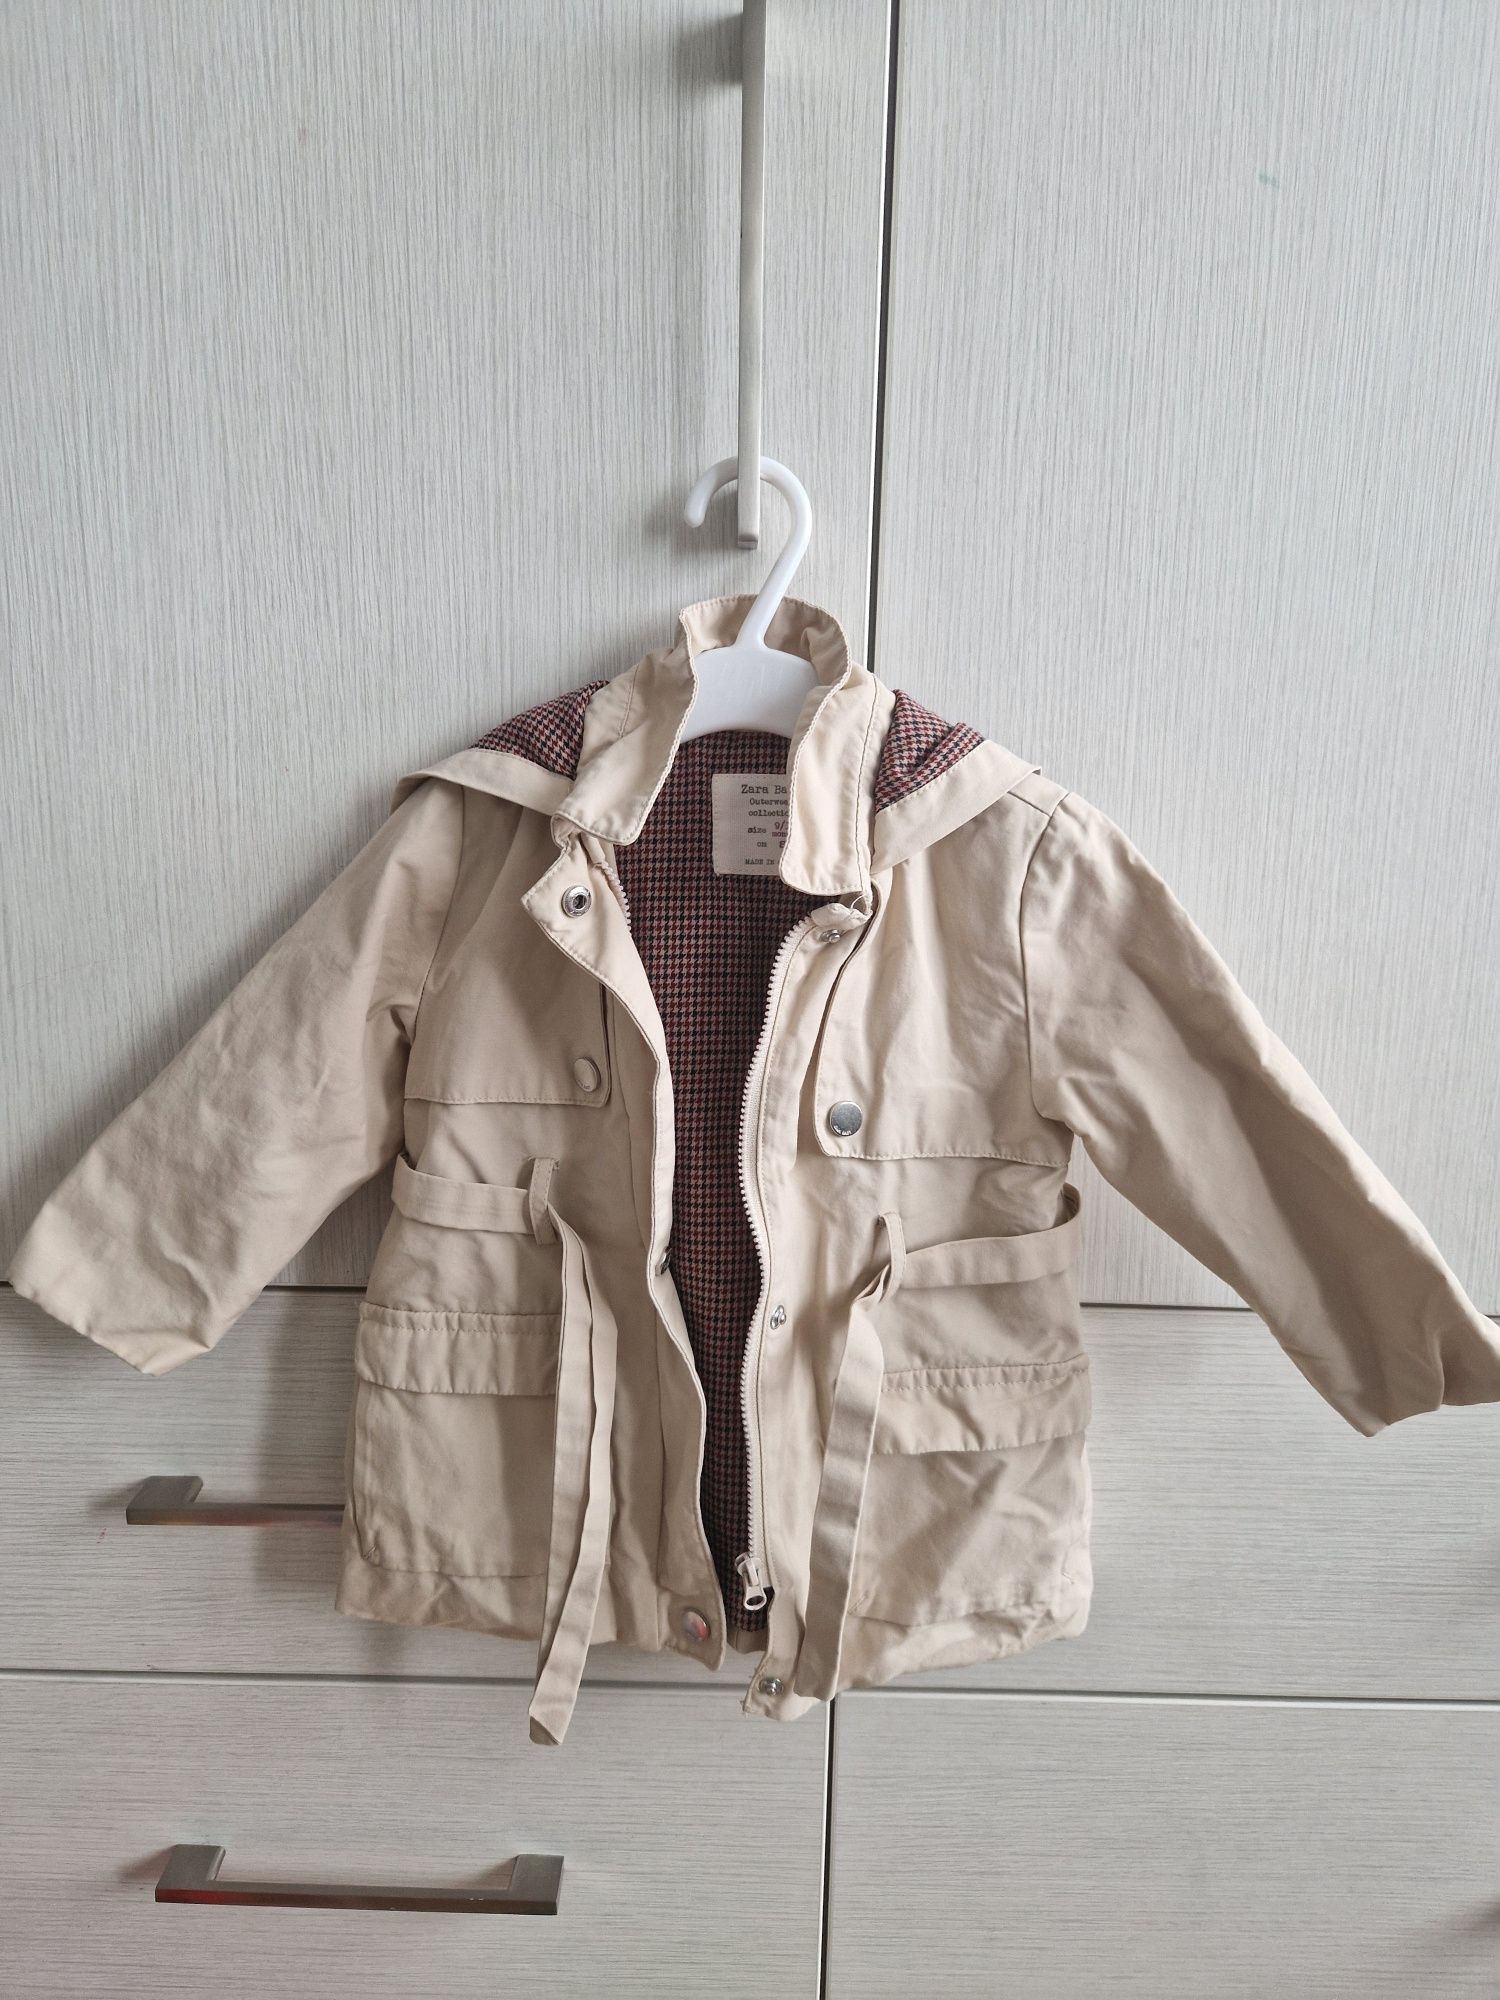 Пролетно яке (шлиферче) Zara - размер 80-86- като ново